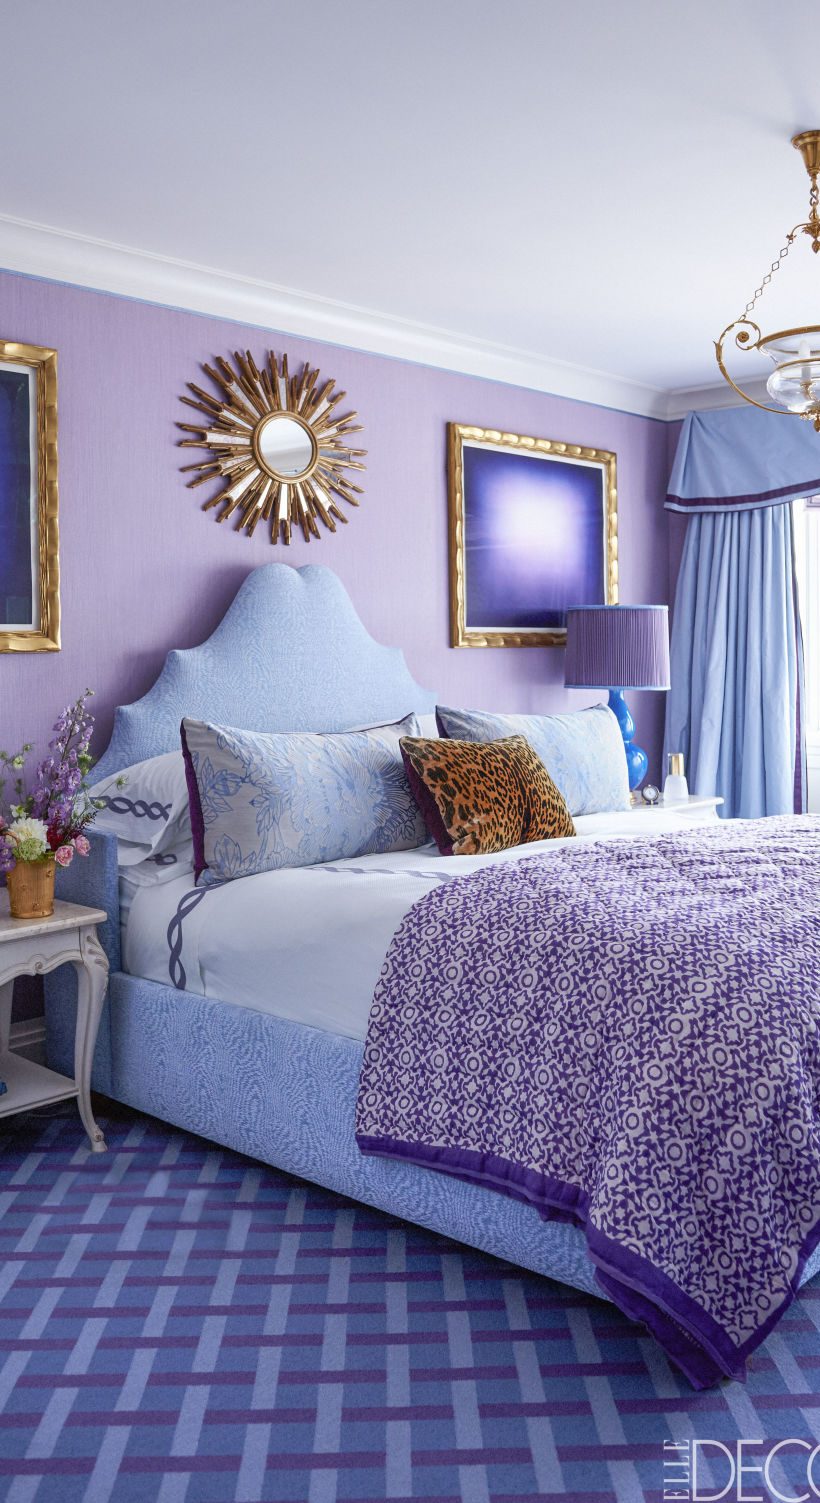 Interior Design: purple, blue, patterns and textures by Alex Papachristidis